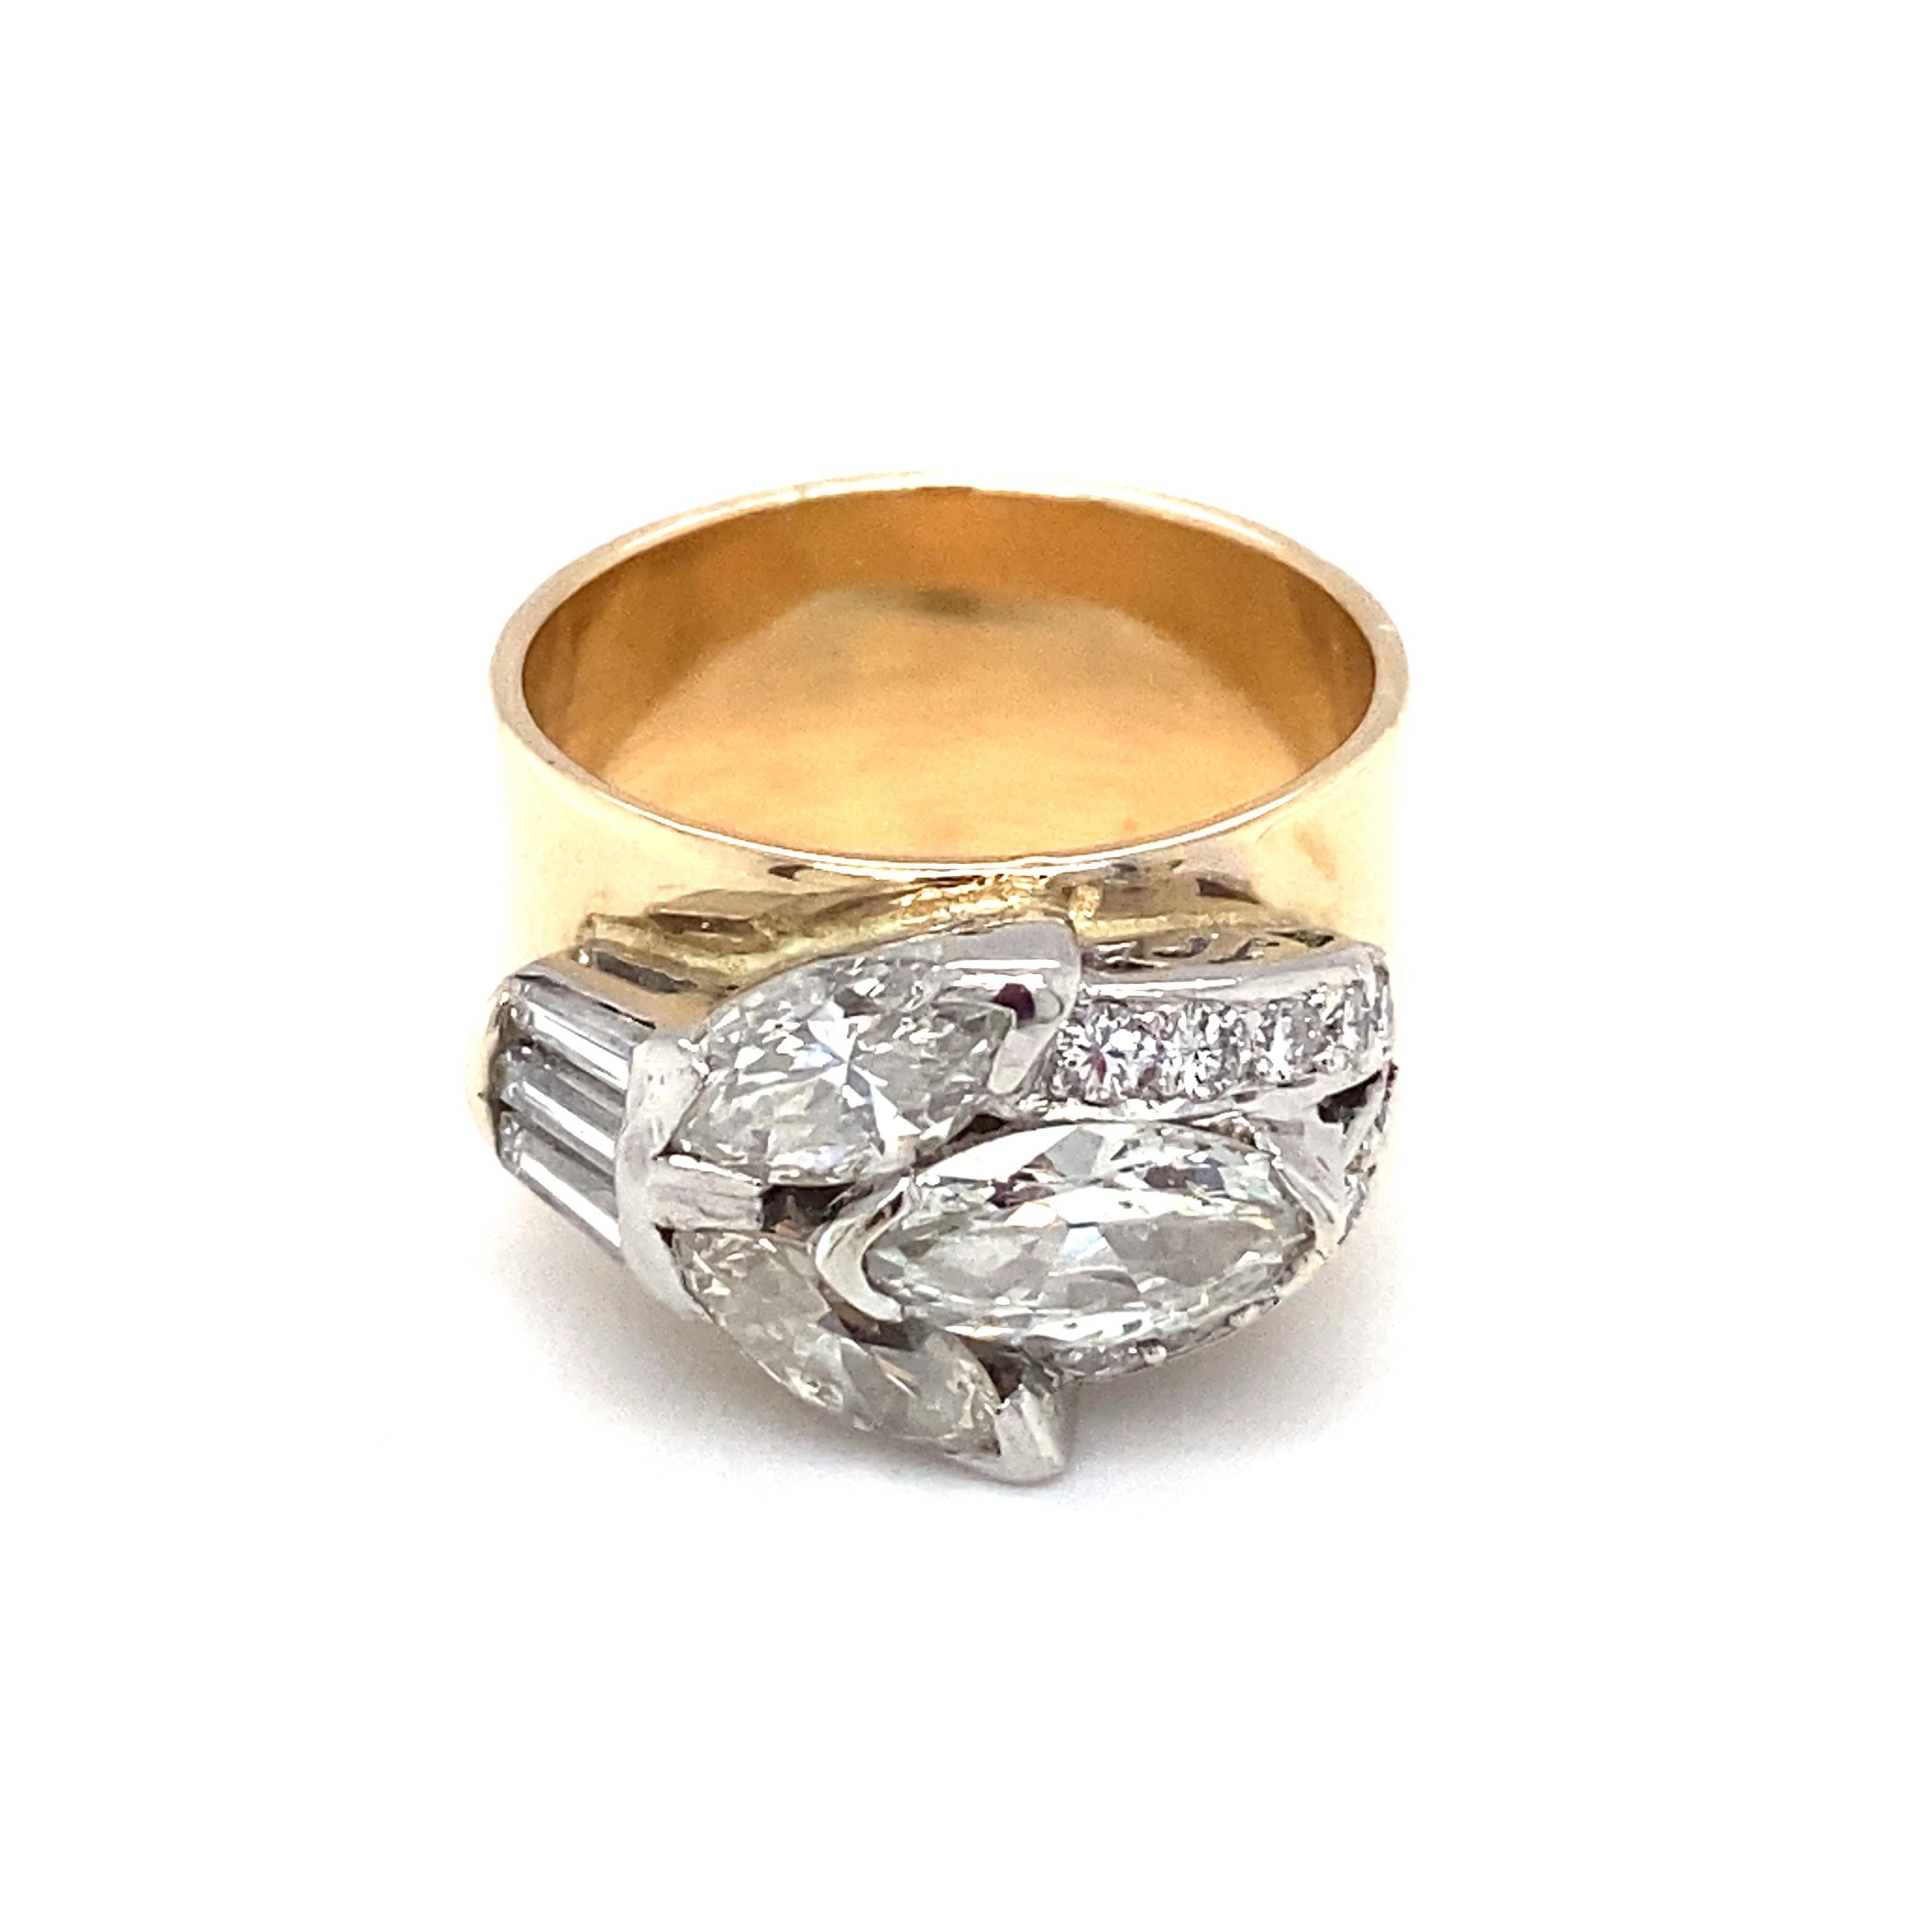 Circa 1920s 2.32 Carat Diamond Ring in 14 Karat Two Tone Gold For Sale 1